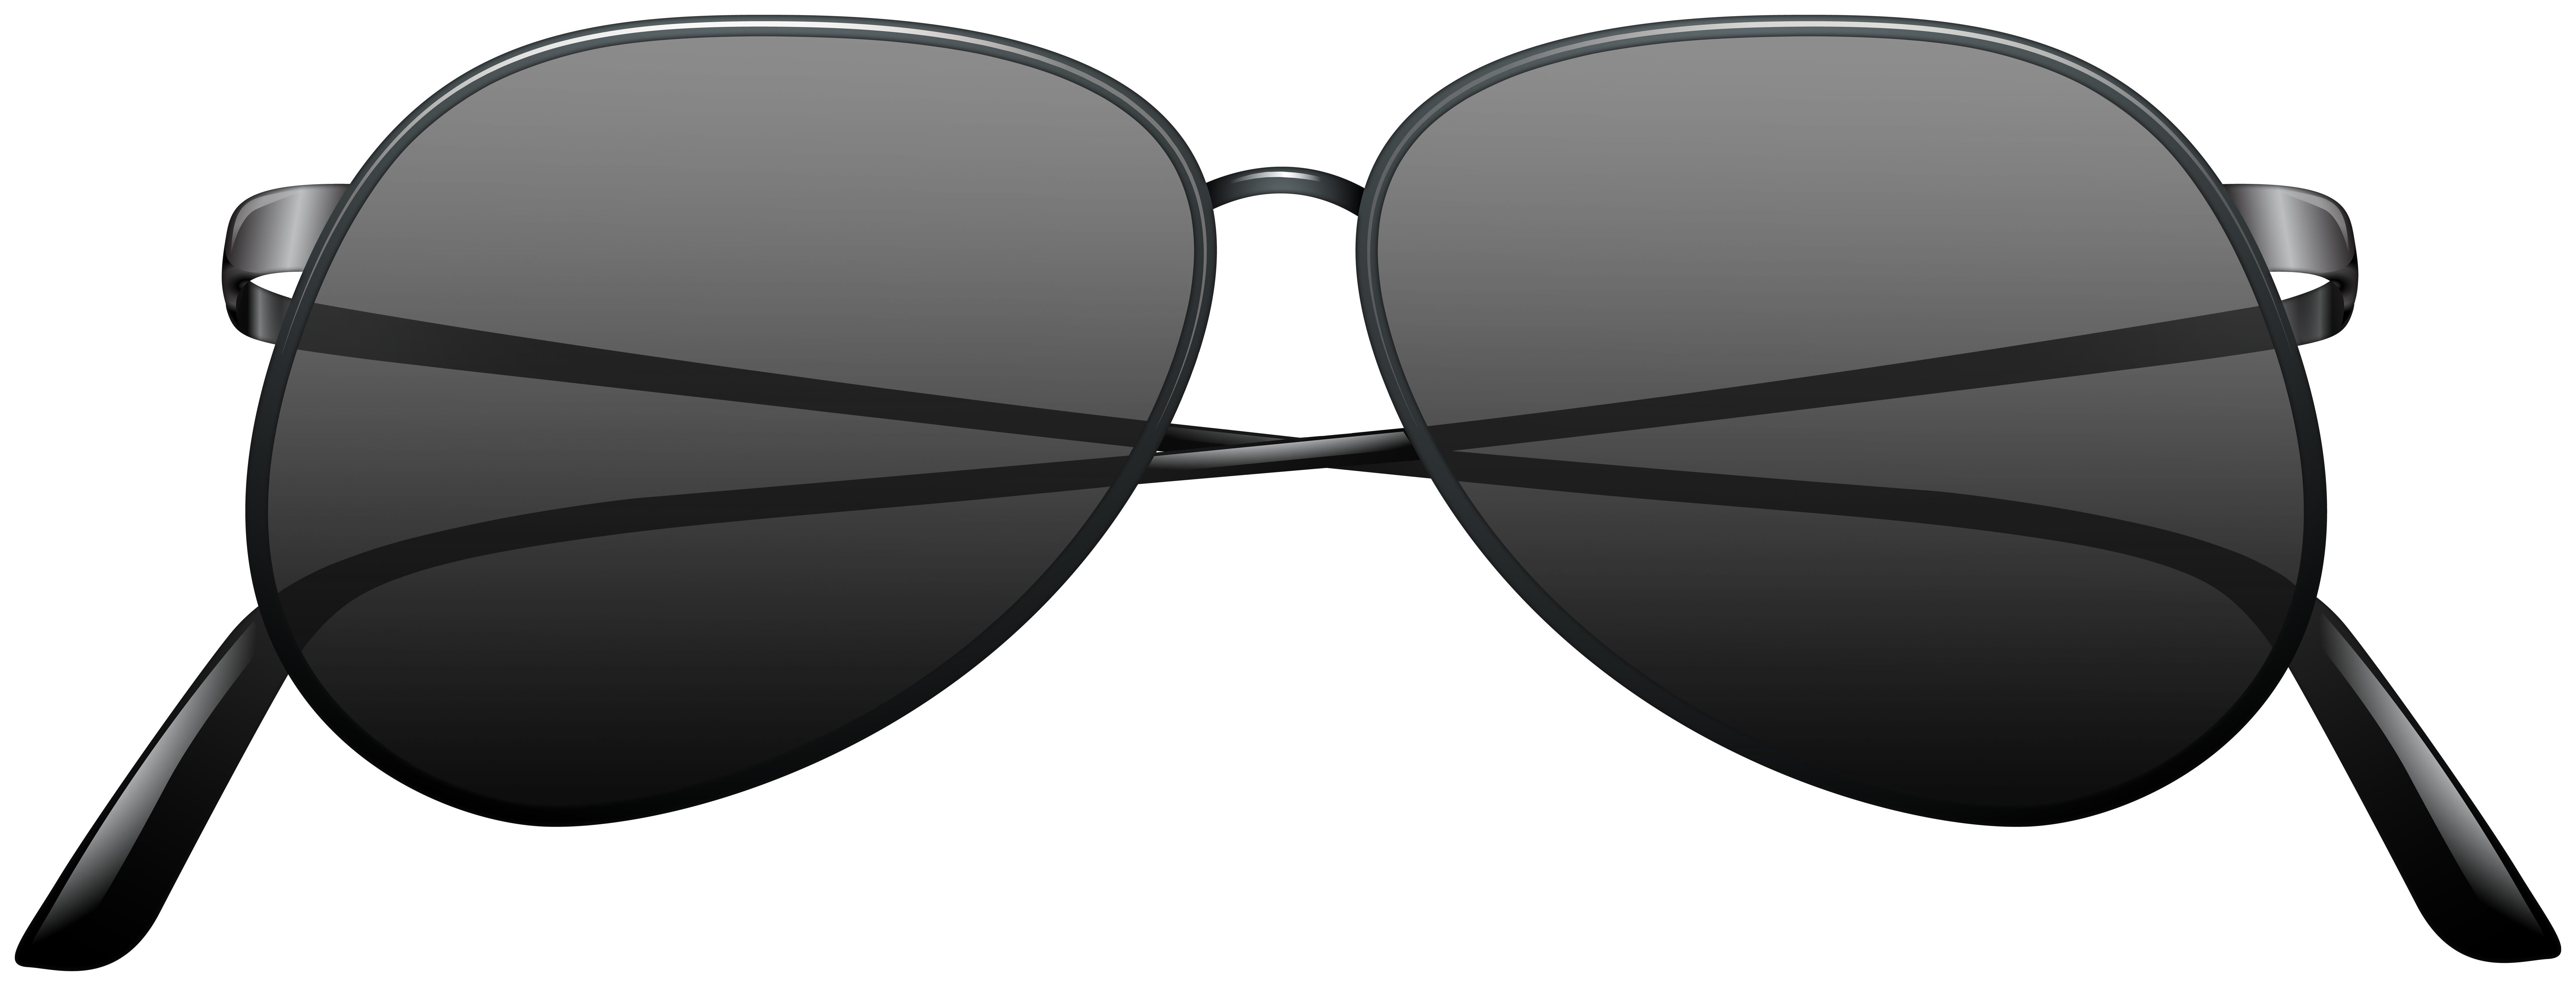 sunglasses clip art free